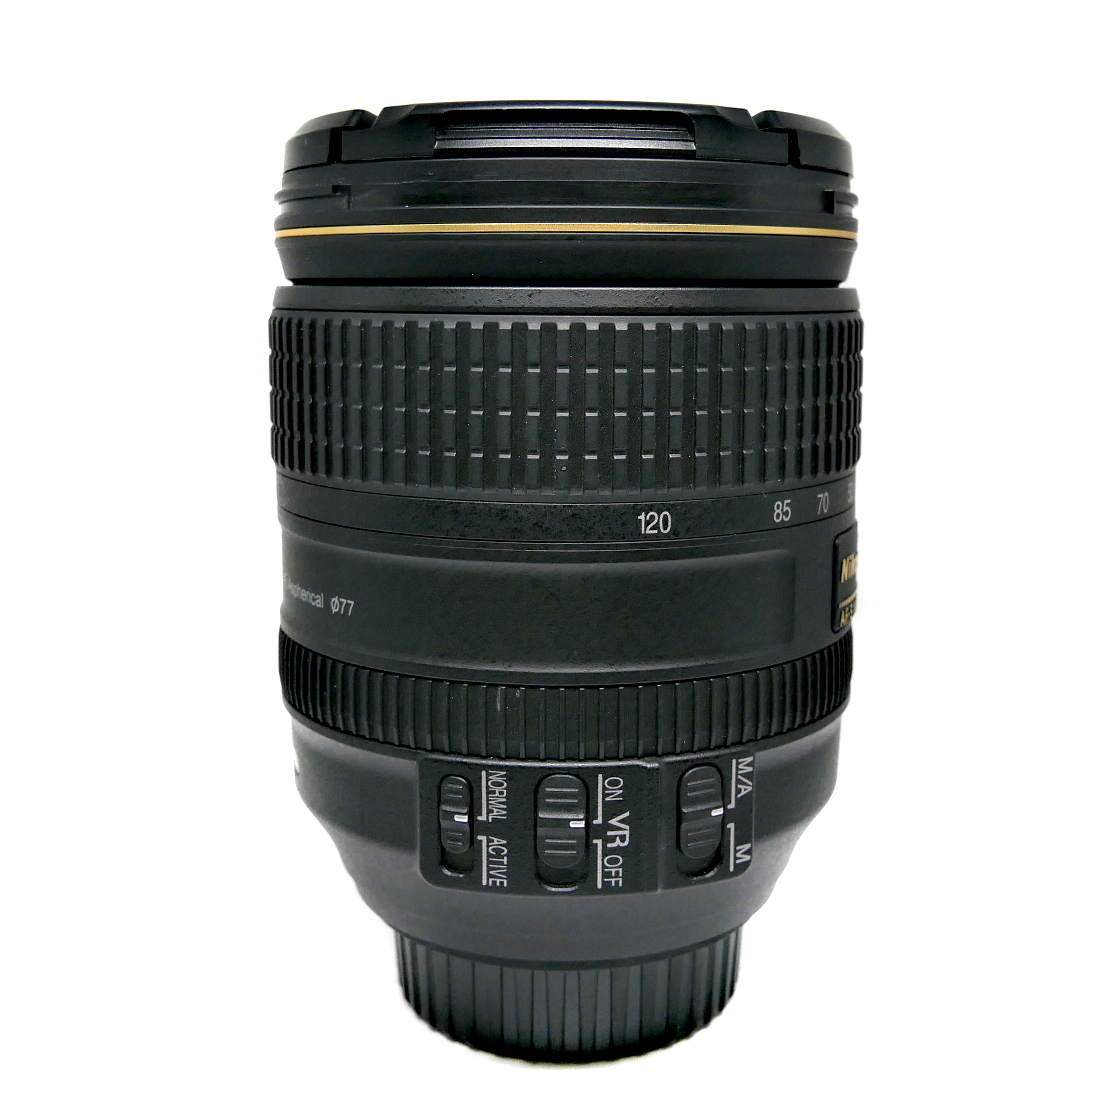 (Myyty) Nikon AF-S Nikkor 24-120mm f/4 G ED (Käytetty)